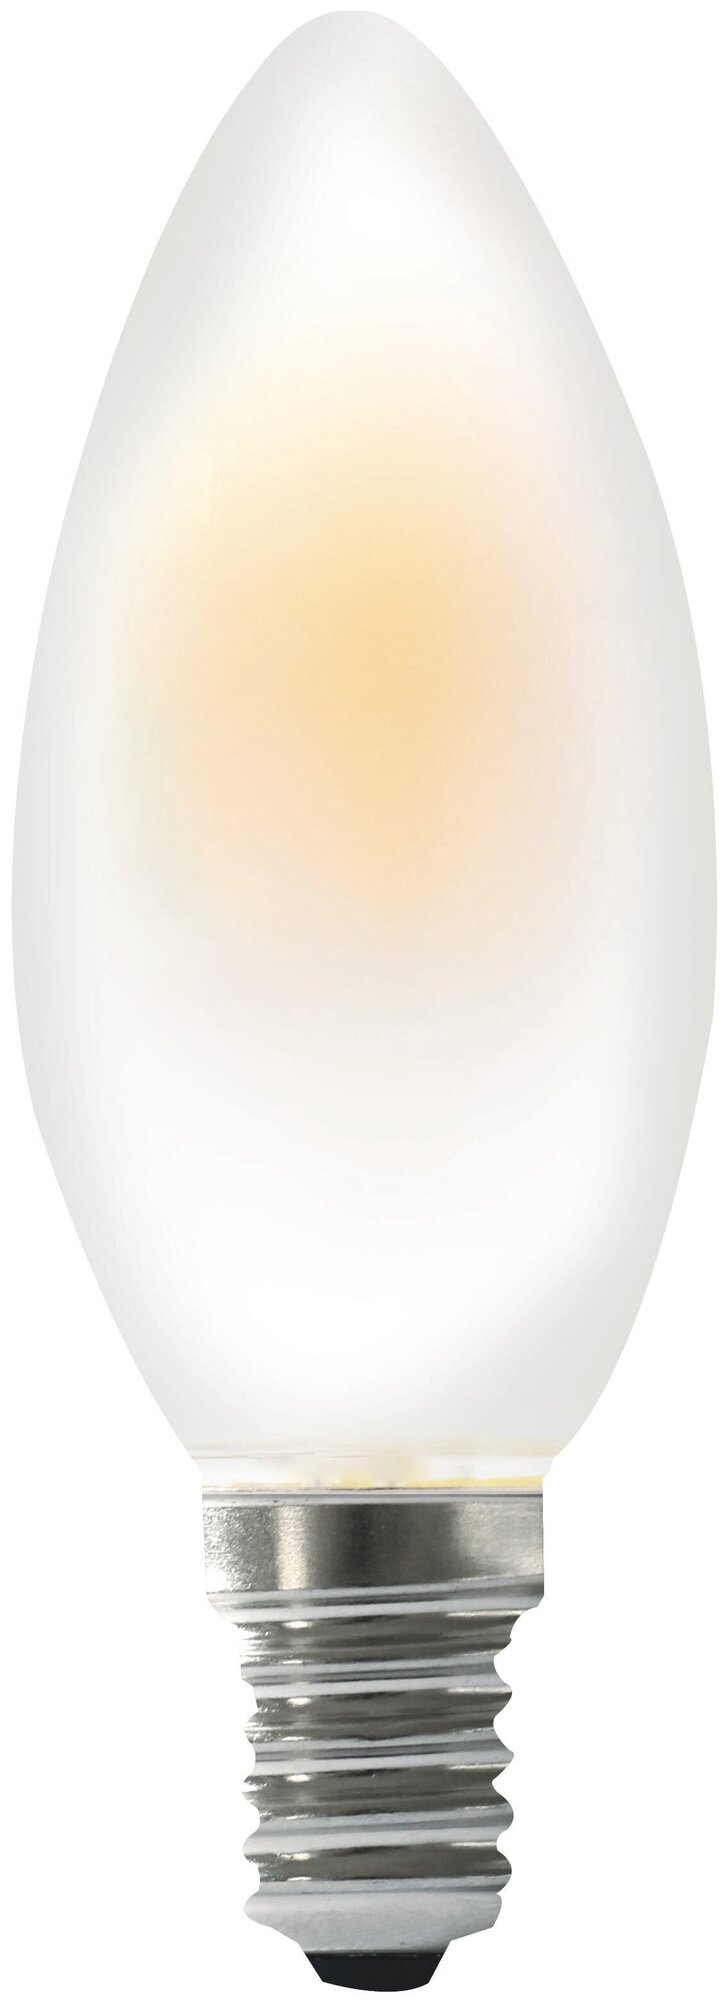 Светодиодная лампа VKlux BK-14W5C30 Frosted